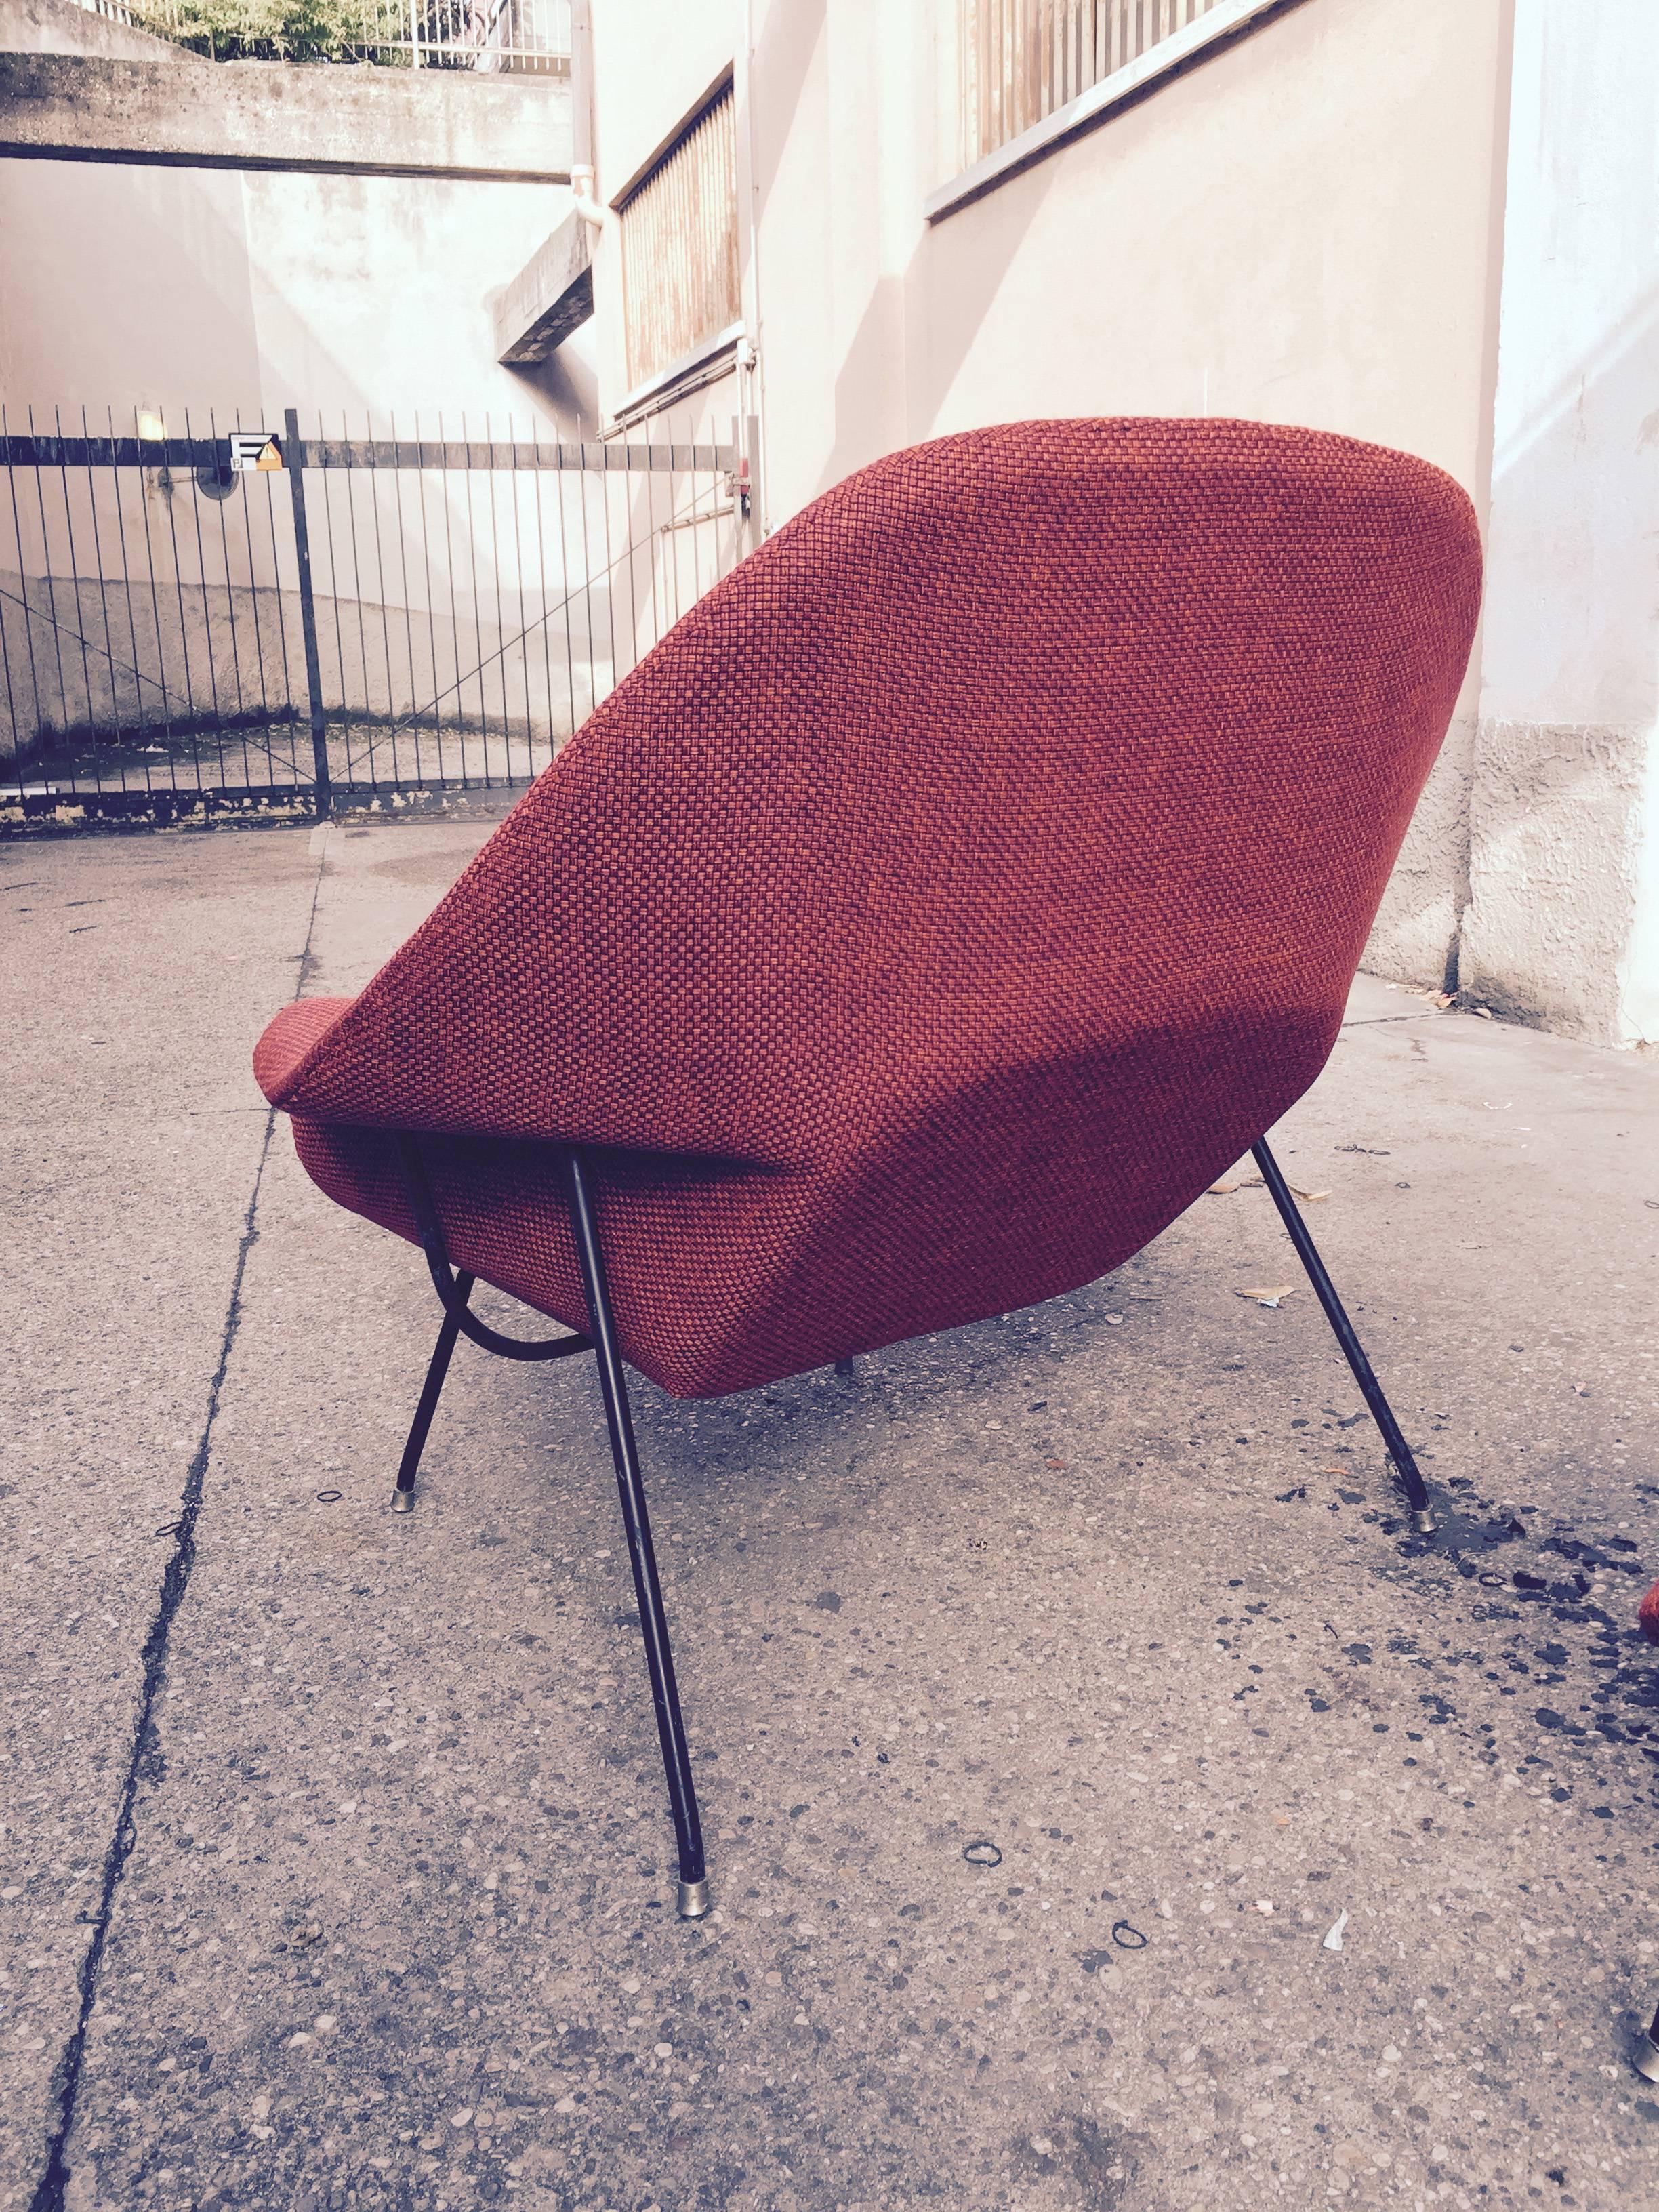 Metal Chair with Ottoman Designed by Eero Saarinen in 1950